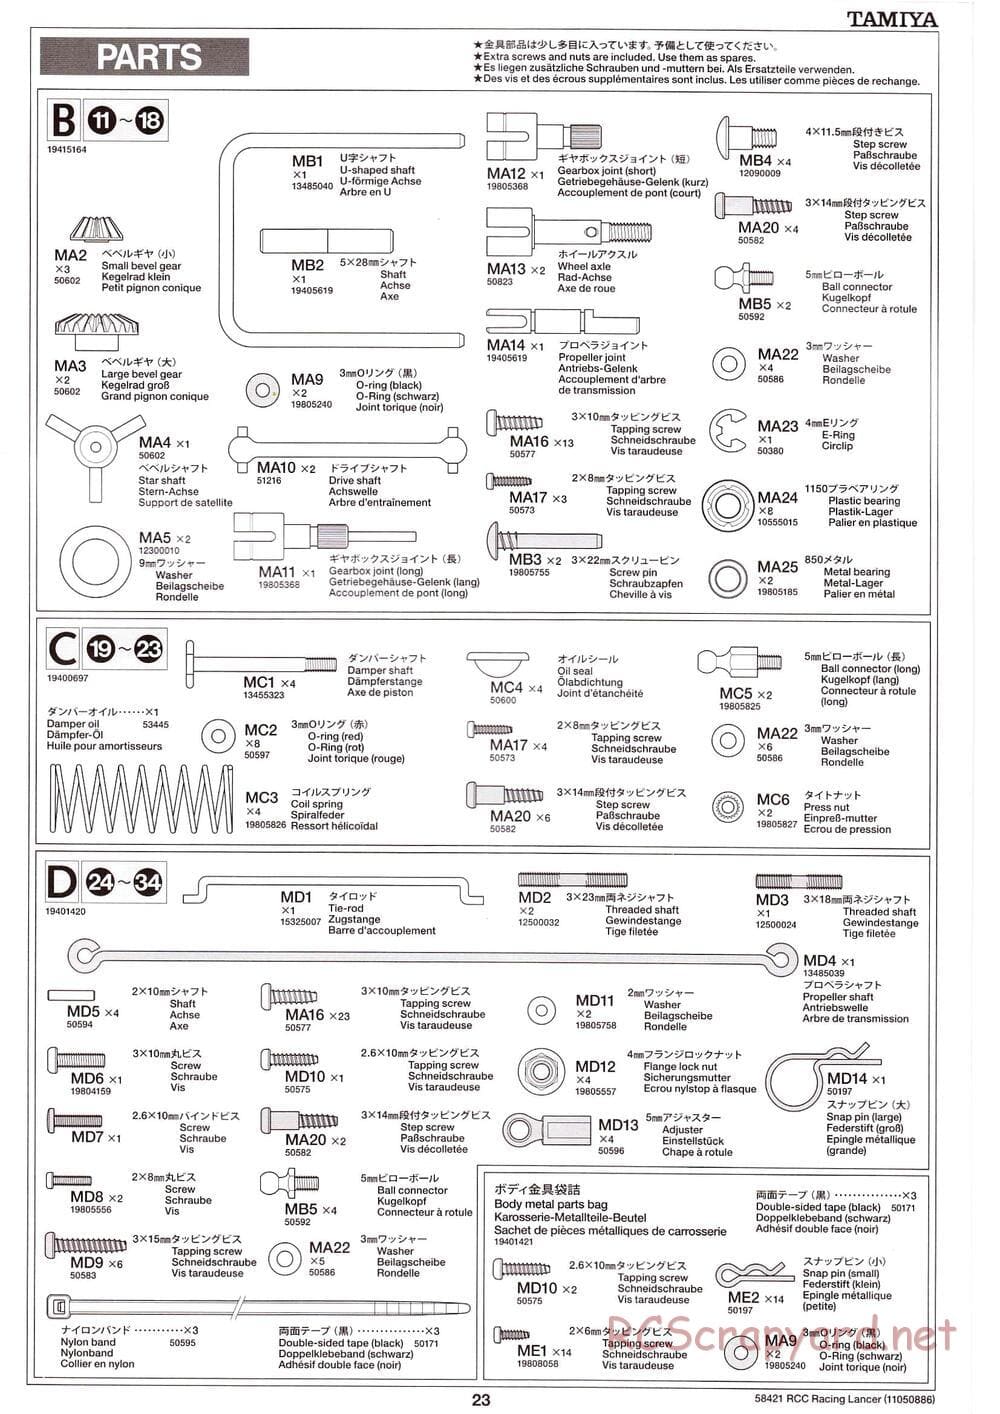 Tamiya - Mitsubishi Racing Lancer - DF-01 Chassis - Manual - Page 23